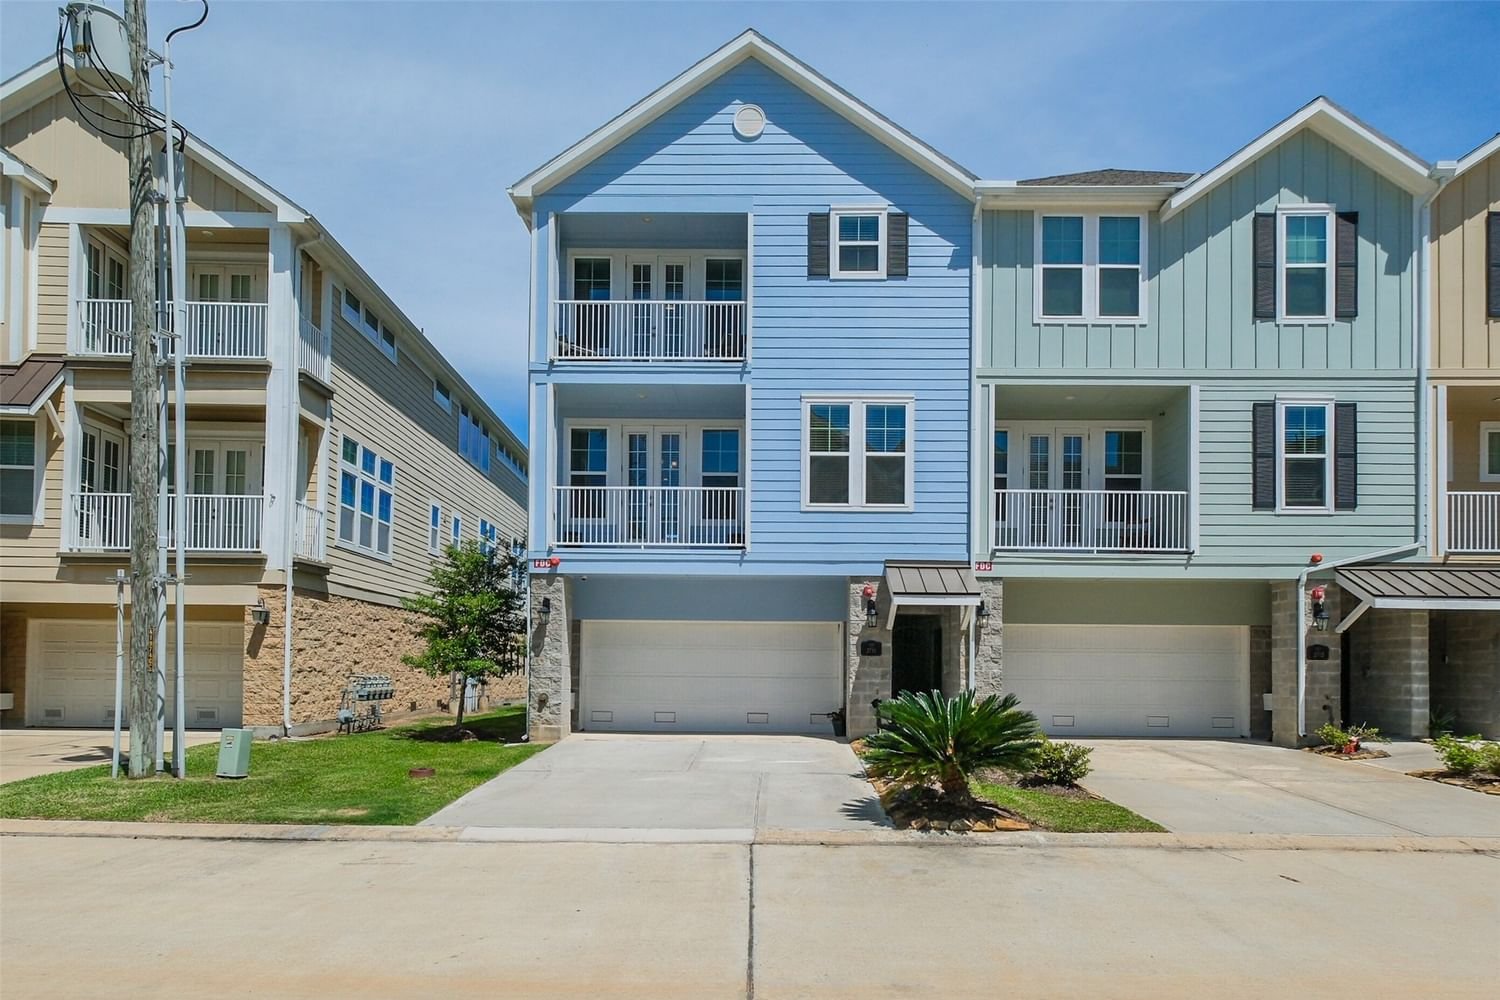 Real estate property located at 2711 Veranda, Galveston, Veranda Twnhms Ph 1 2015, League City, TX, US